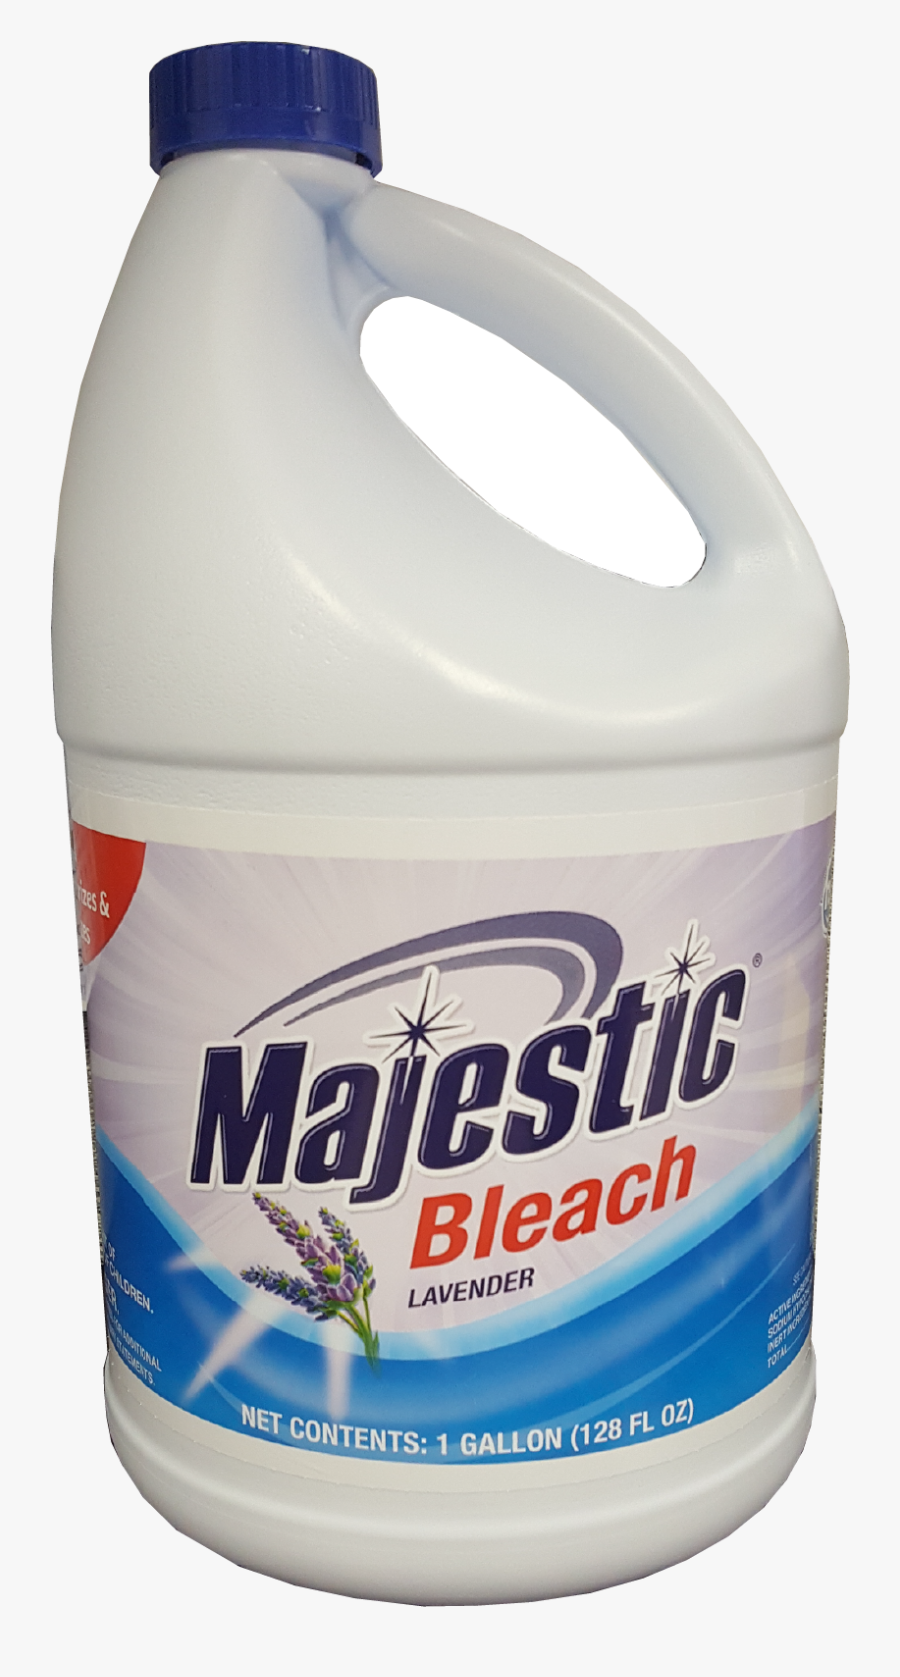 Bleach Bottle Png - Mosquito, Transparent Clipart